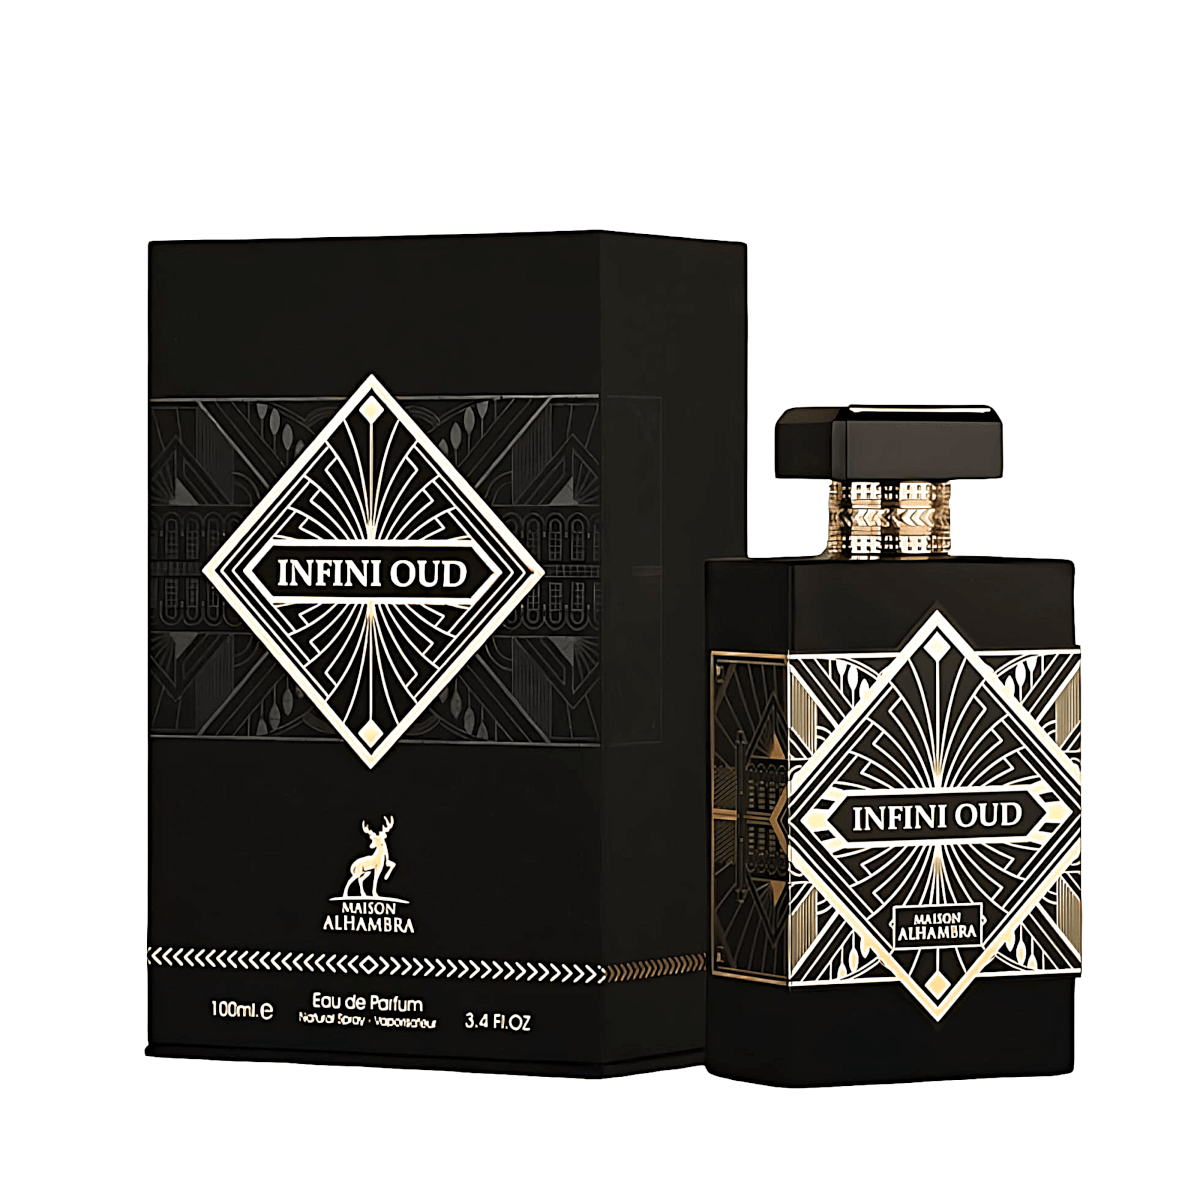 Infini Oud Perfume / Eau De Parfum By Maison Alhambra / Lattafa (Inspired By Initio Oud For Greatness)